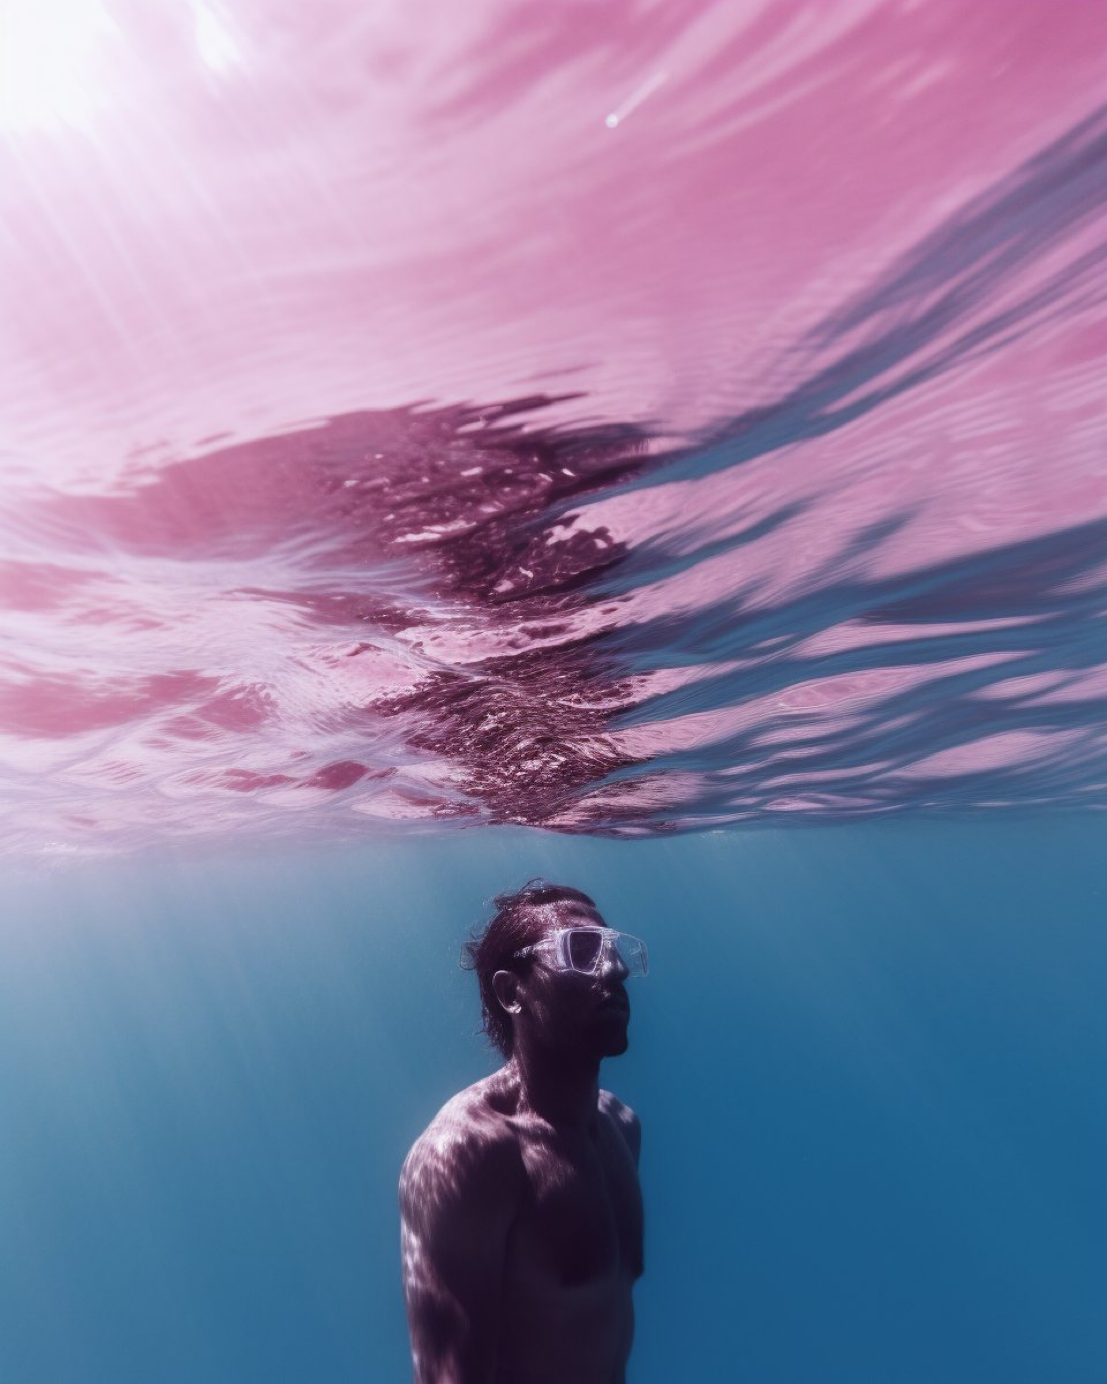 45-degree angle half-underwater cinematic shot of surfer, minimalism, soft pink, 35mm --ar 4:5